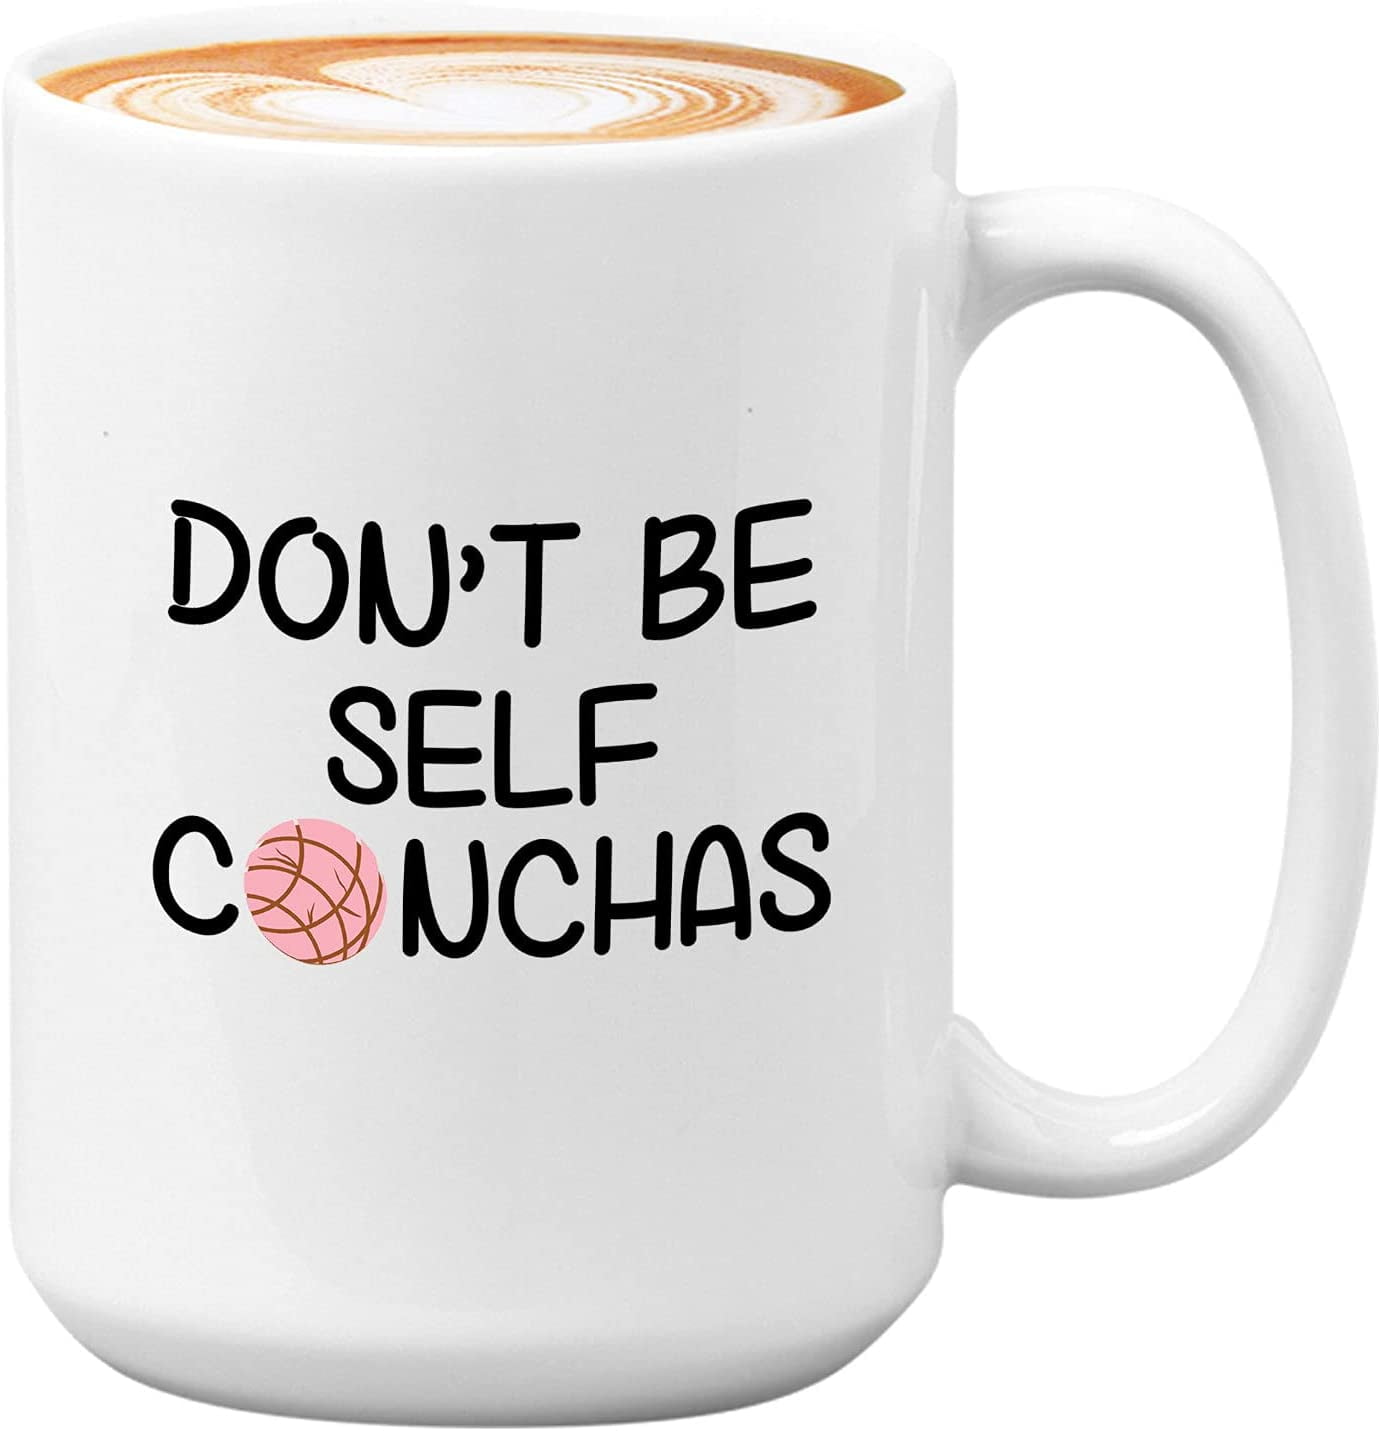 Starbucks concha cup i eat in spanish venti cup 24oz mexican bread